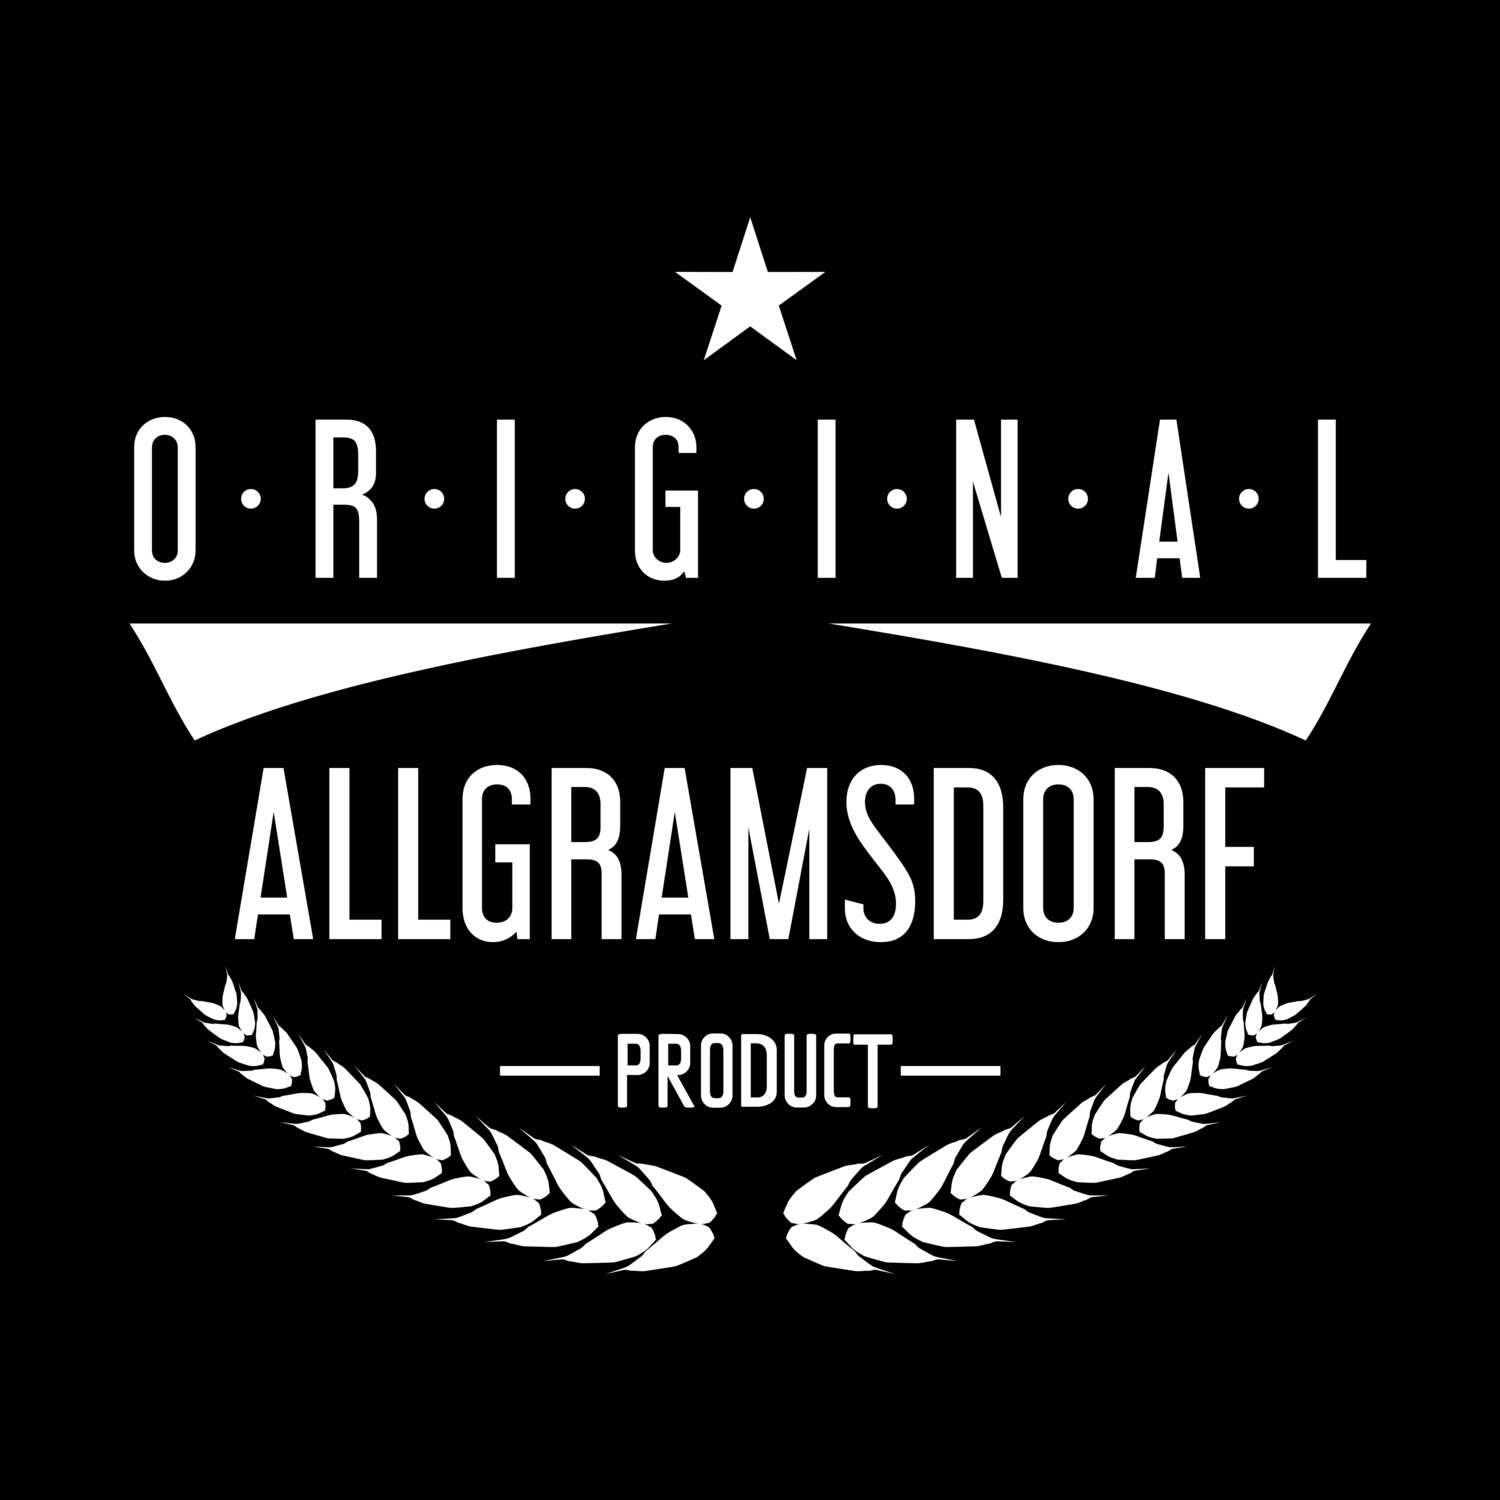 Allgramsdorf T-Shirt »Original Product«